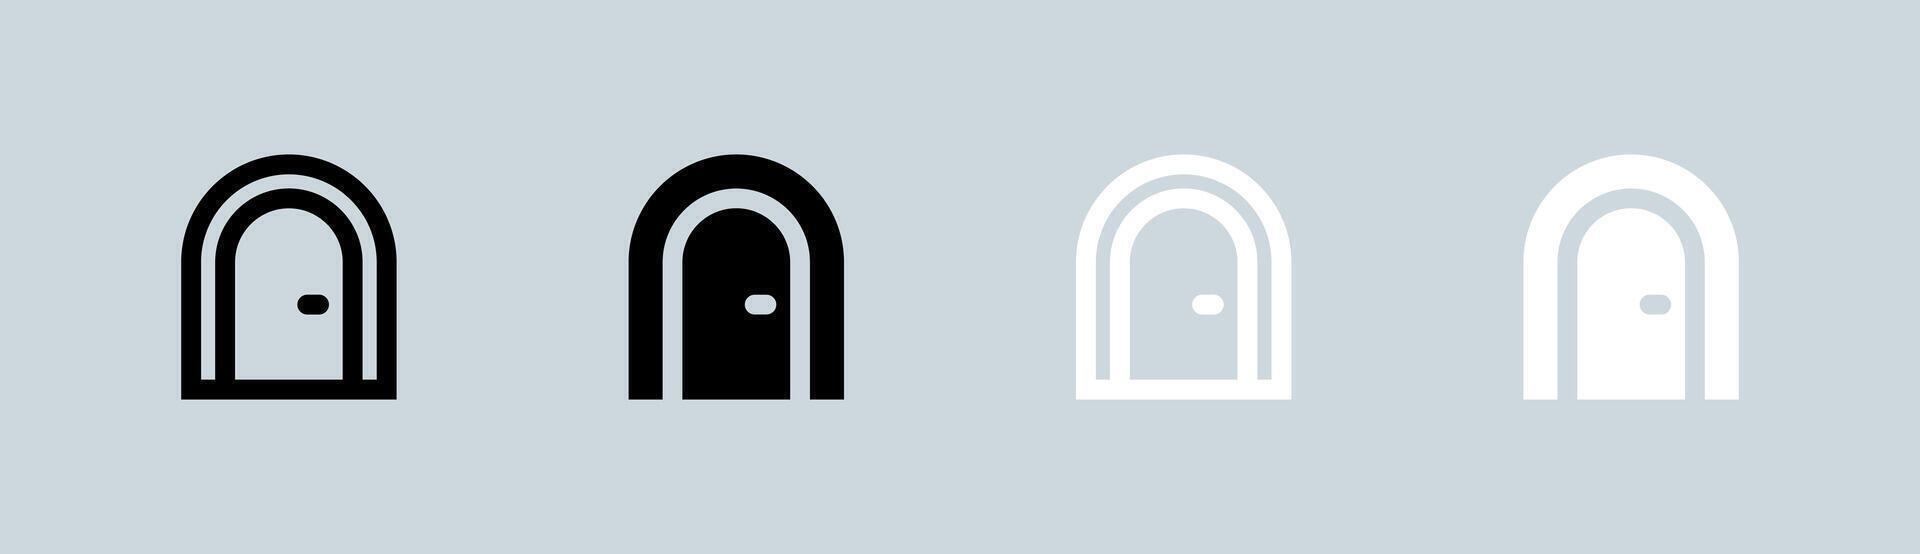 deur icoon reeks in zwart en wit. deuropening tekens vector illustratie.